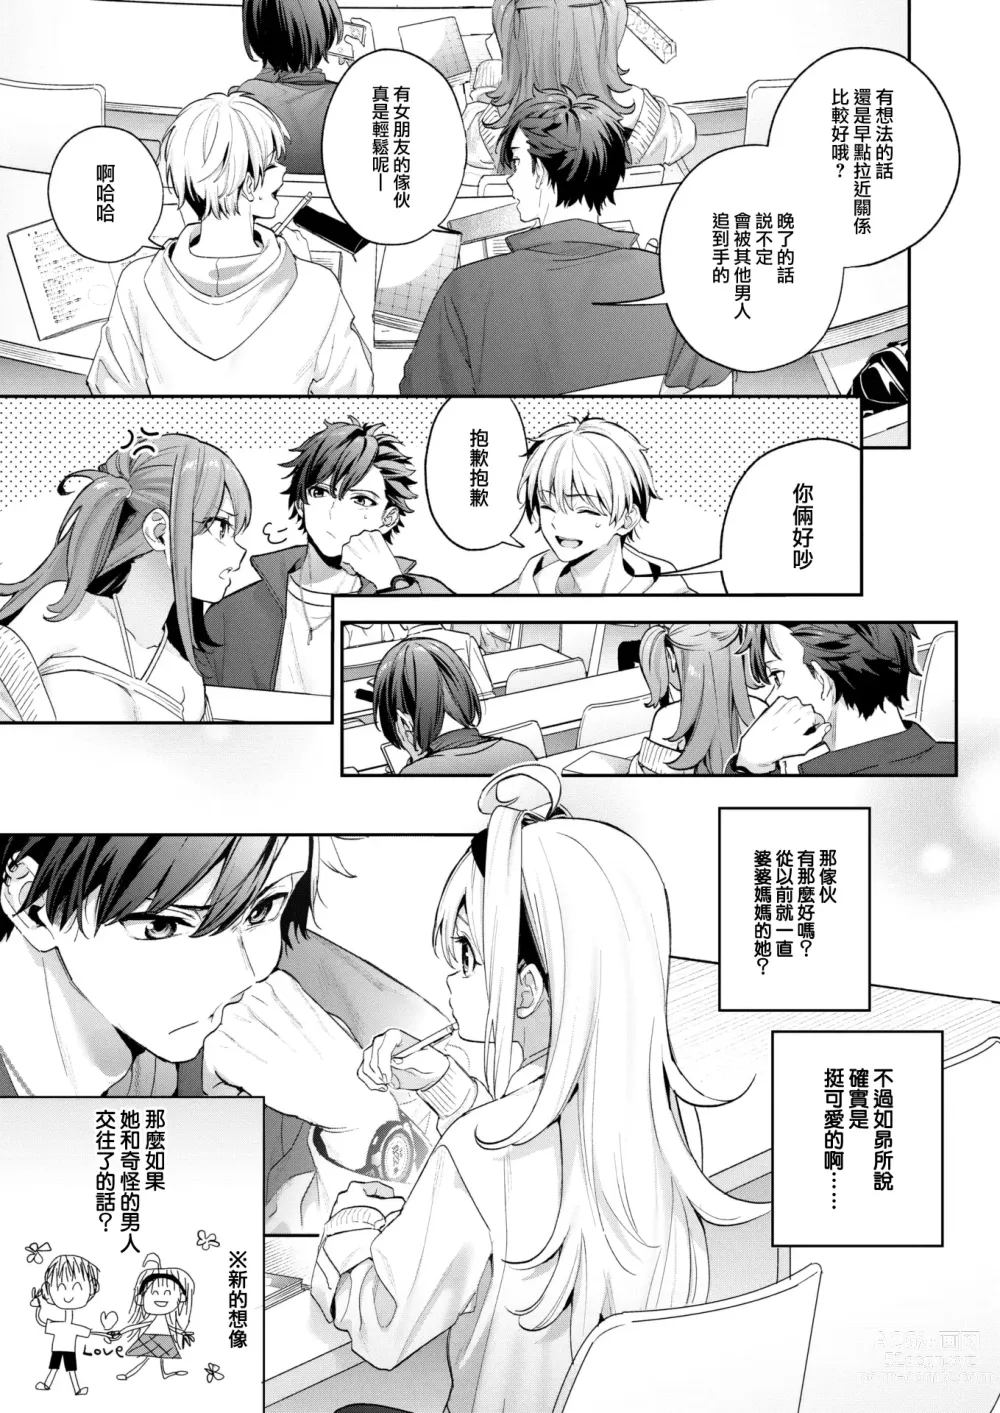 Page 4 of manga melting snow